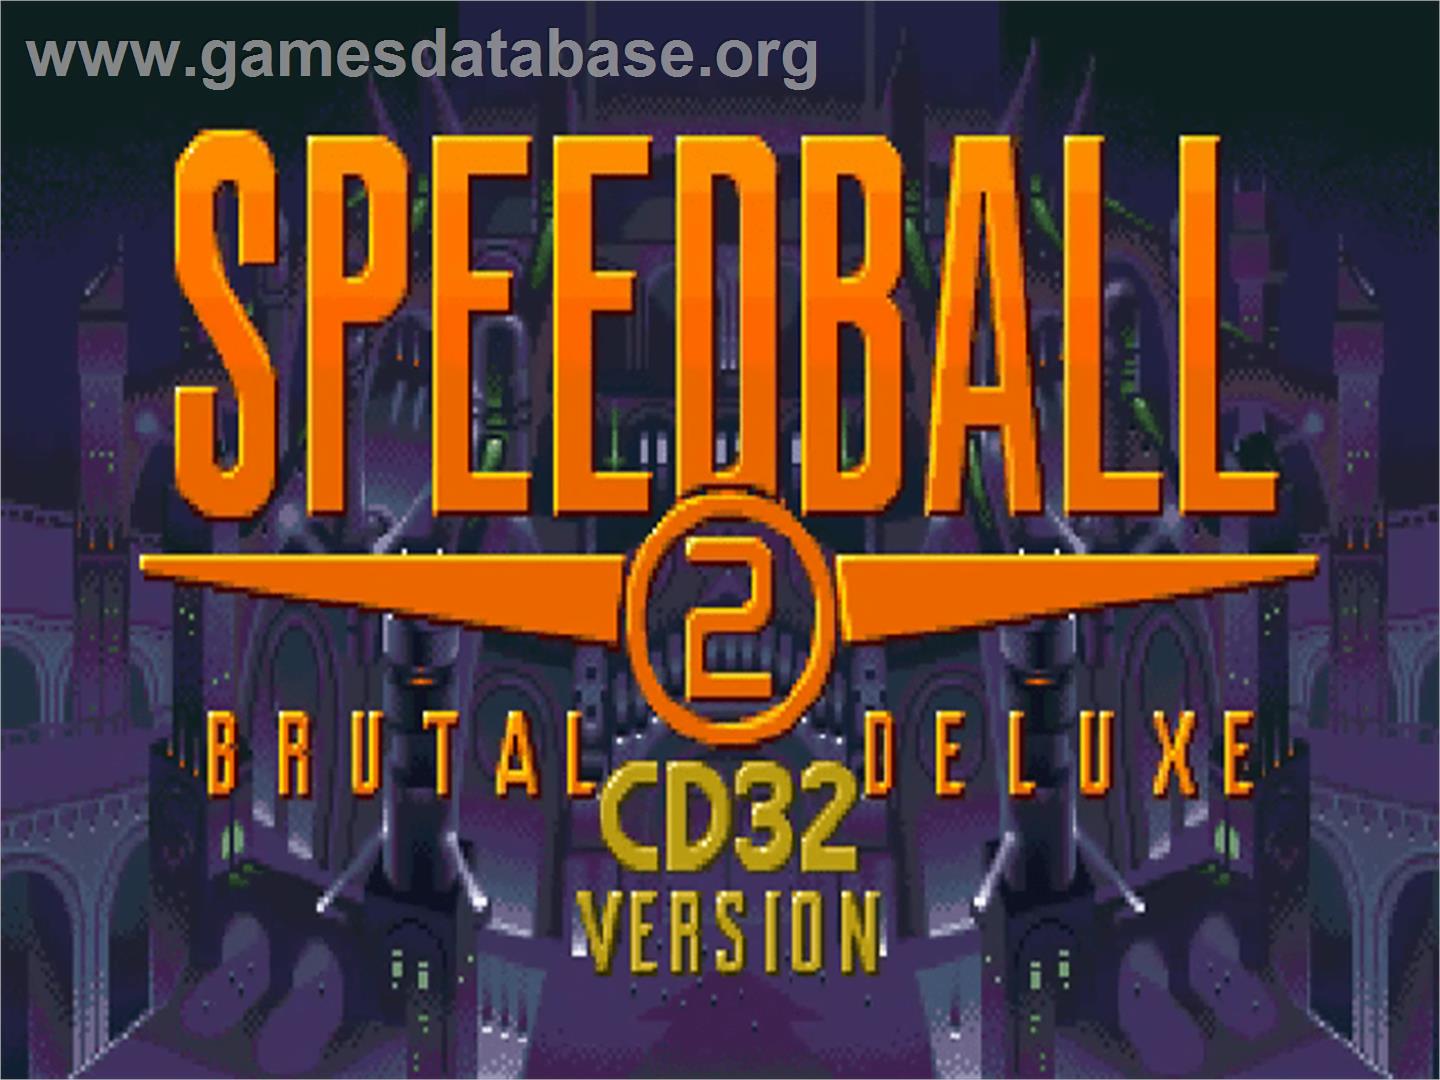 Speedball 2: Brutal Deluxe - Commodore Amiga CD32 - Artwork - Title Screen